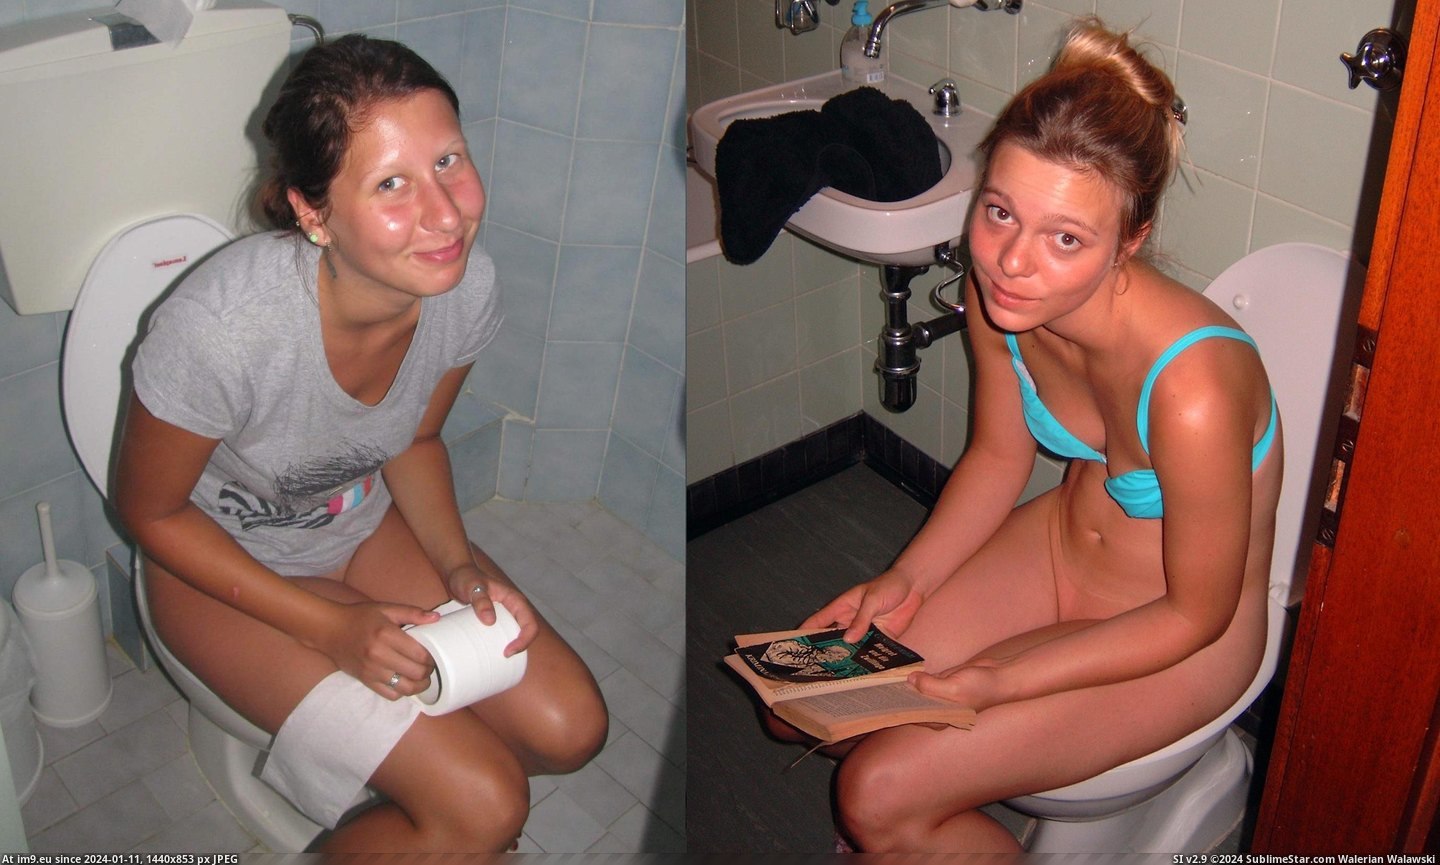 #Hot #Young #Babe #Pose #Alike #Embarassed #Pissing #Bitch #Bath Pose-alike (6) Pic. (Изображение из альбом lookalike teens))